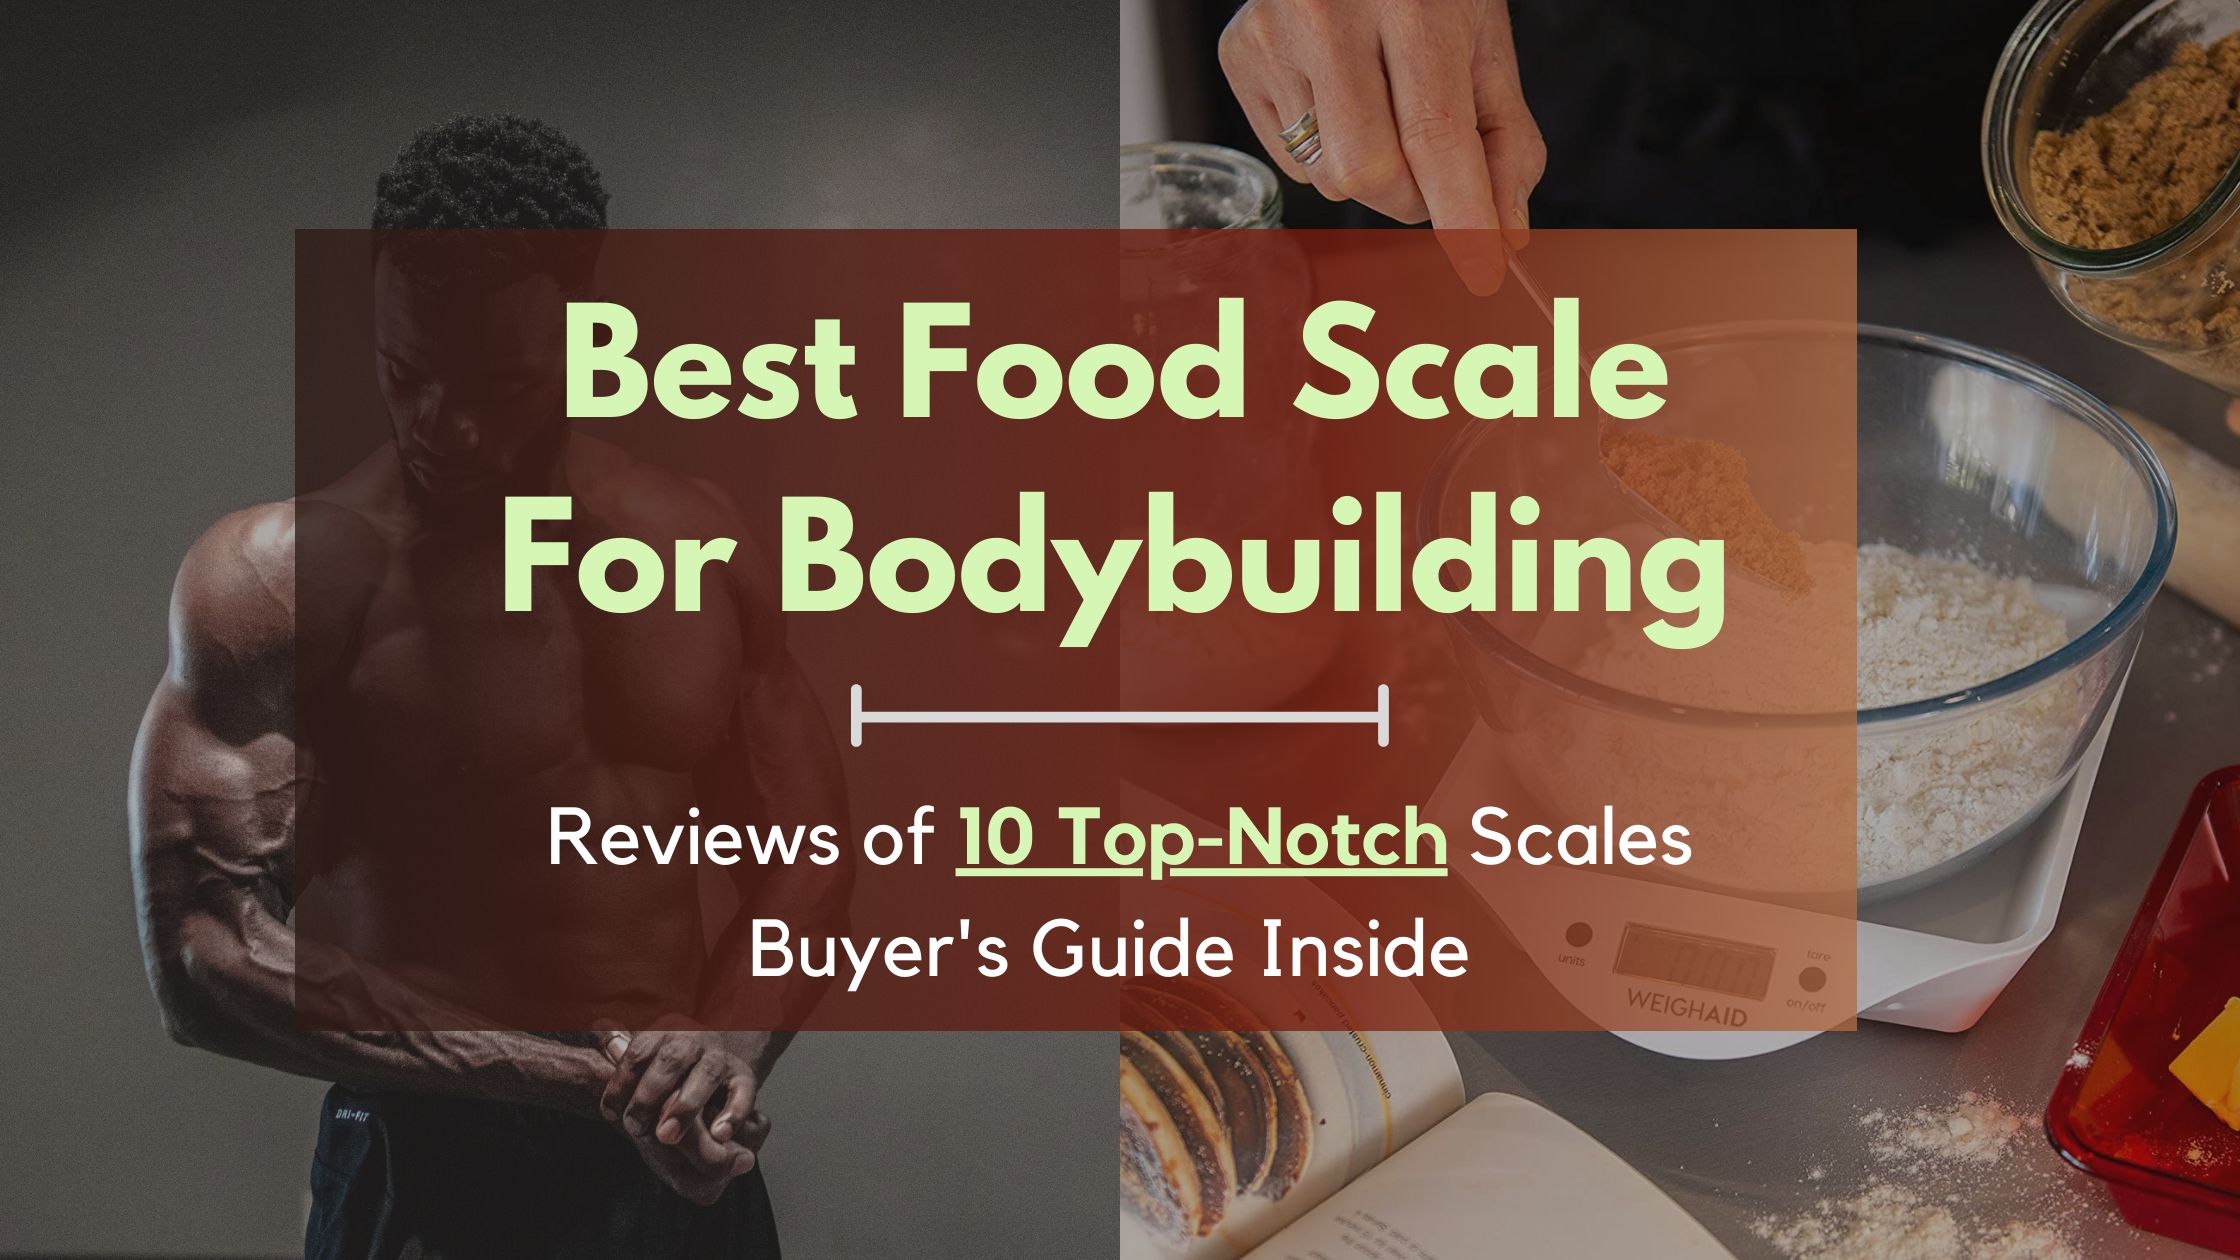 https://www.bestfoodscale.com/wp-content/uploads/2020/07/best-food-scale-for-bodybuilding.jpg